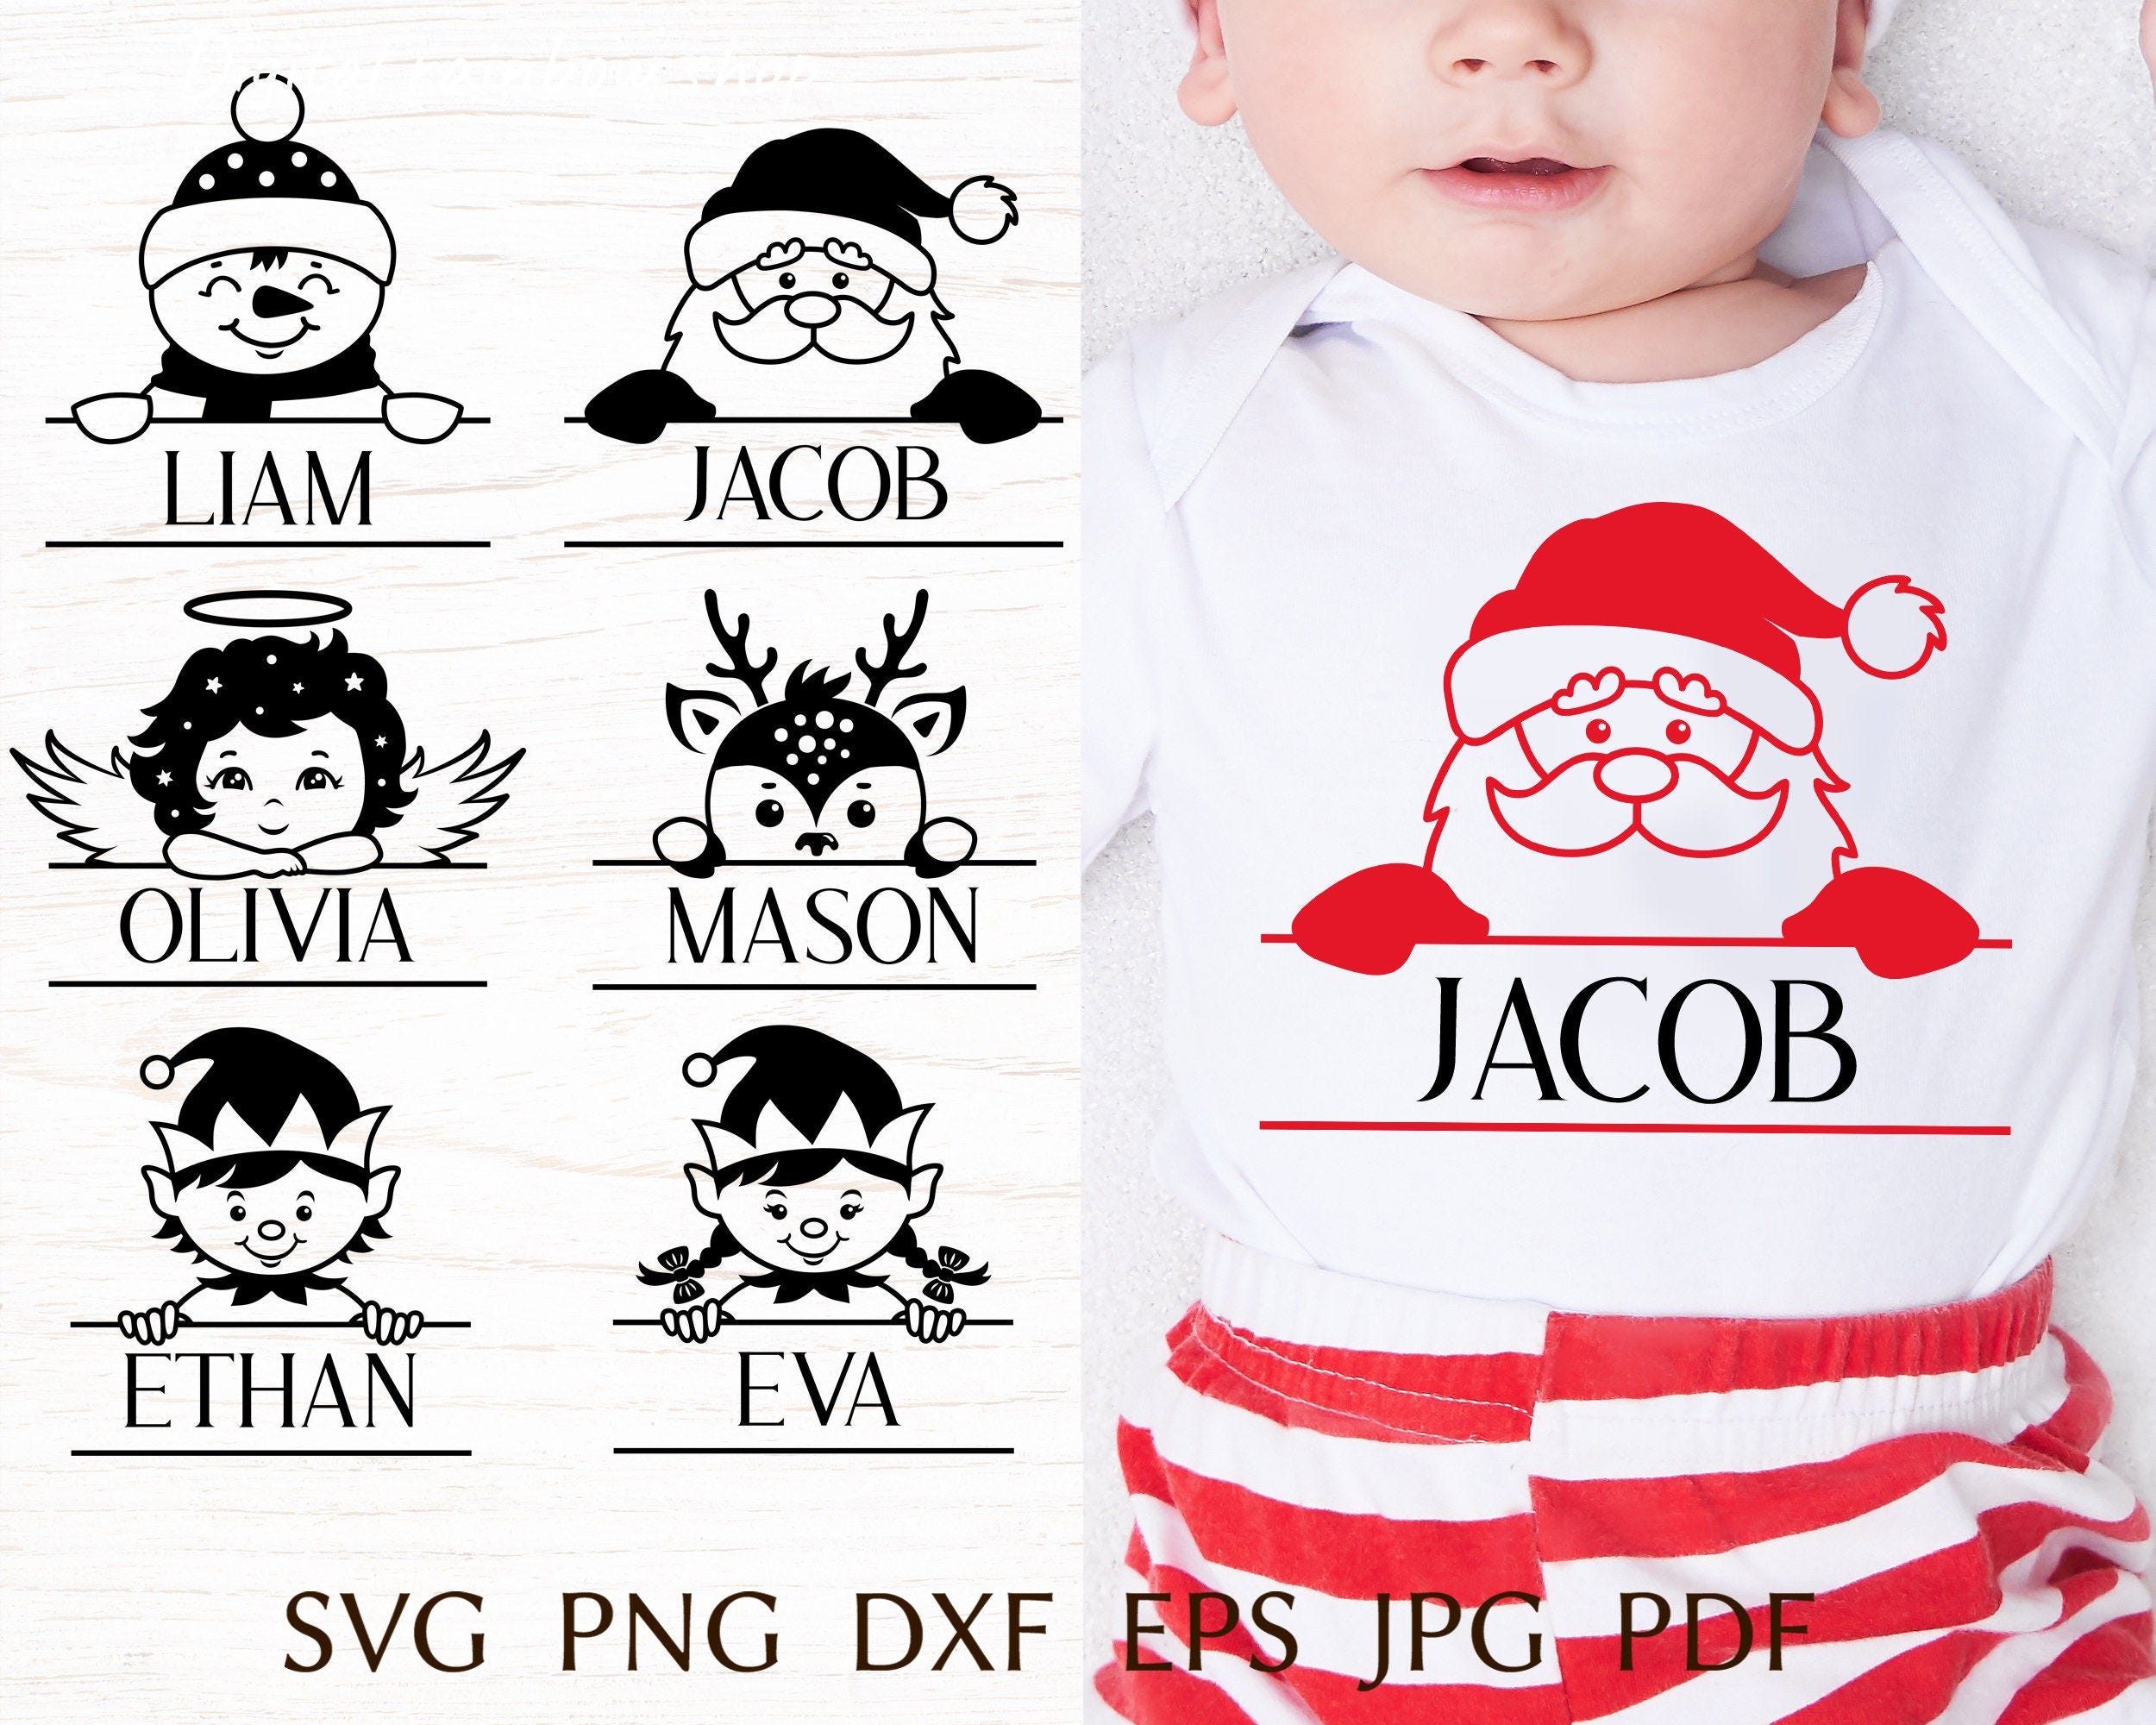 Christmas monogram svg, baby christmas name svg, funny kids christmas, split monogram with santa, elf, angel, reindeer smowman, png clipart